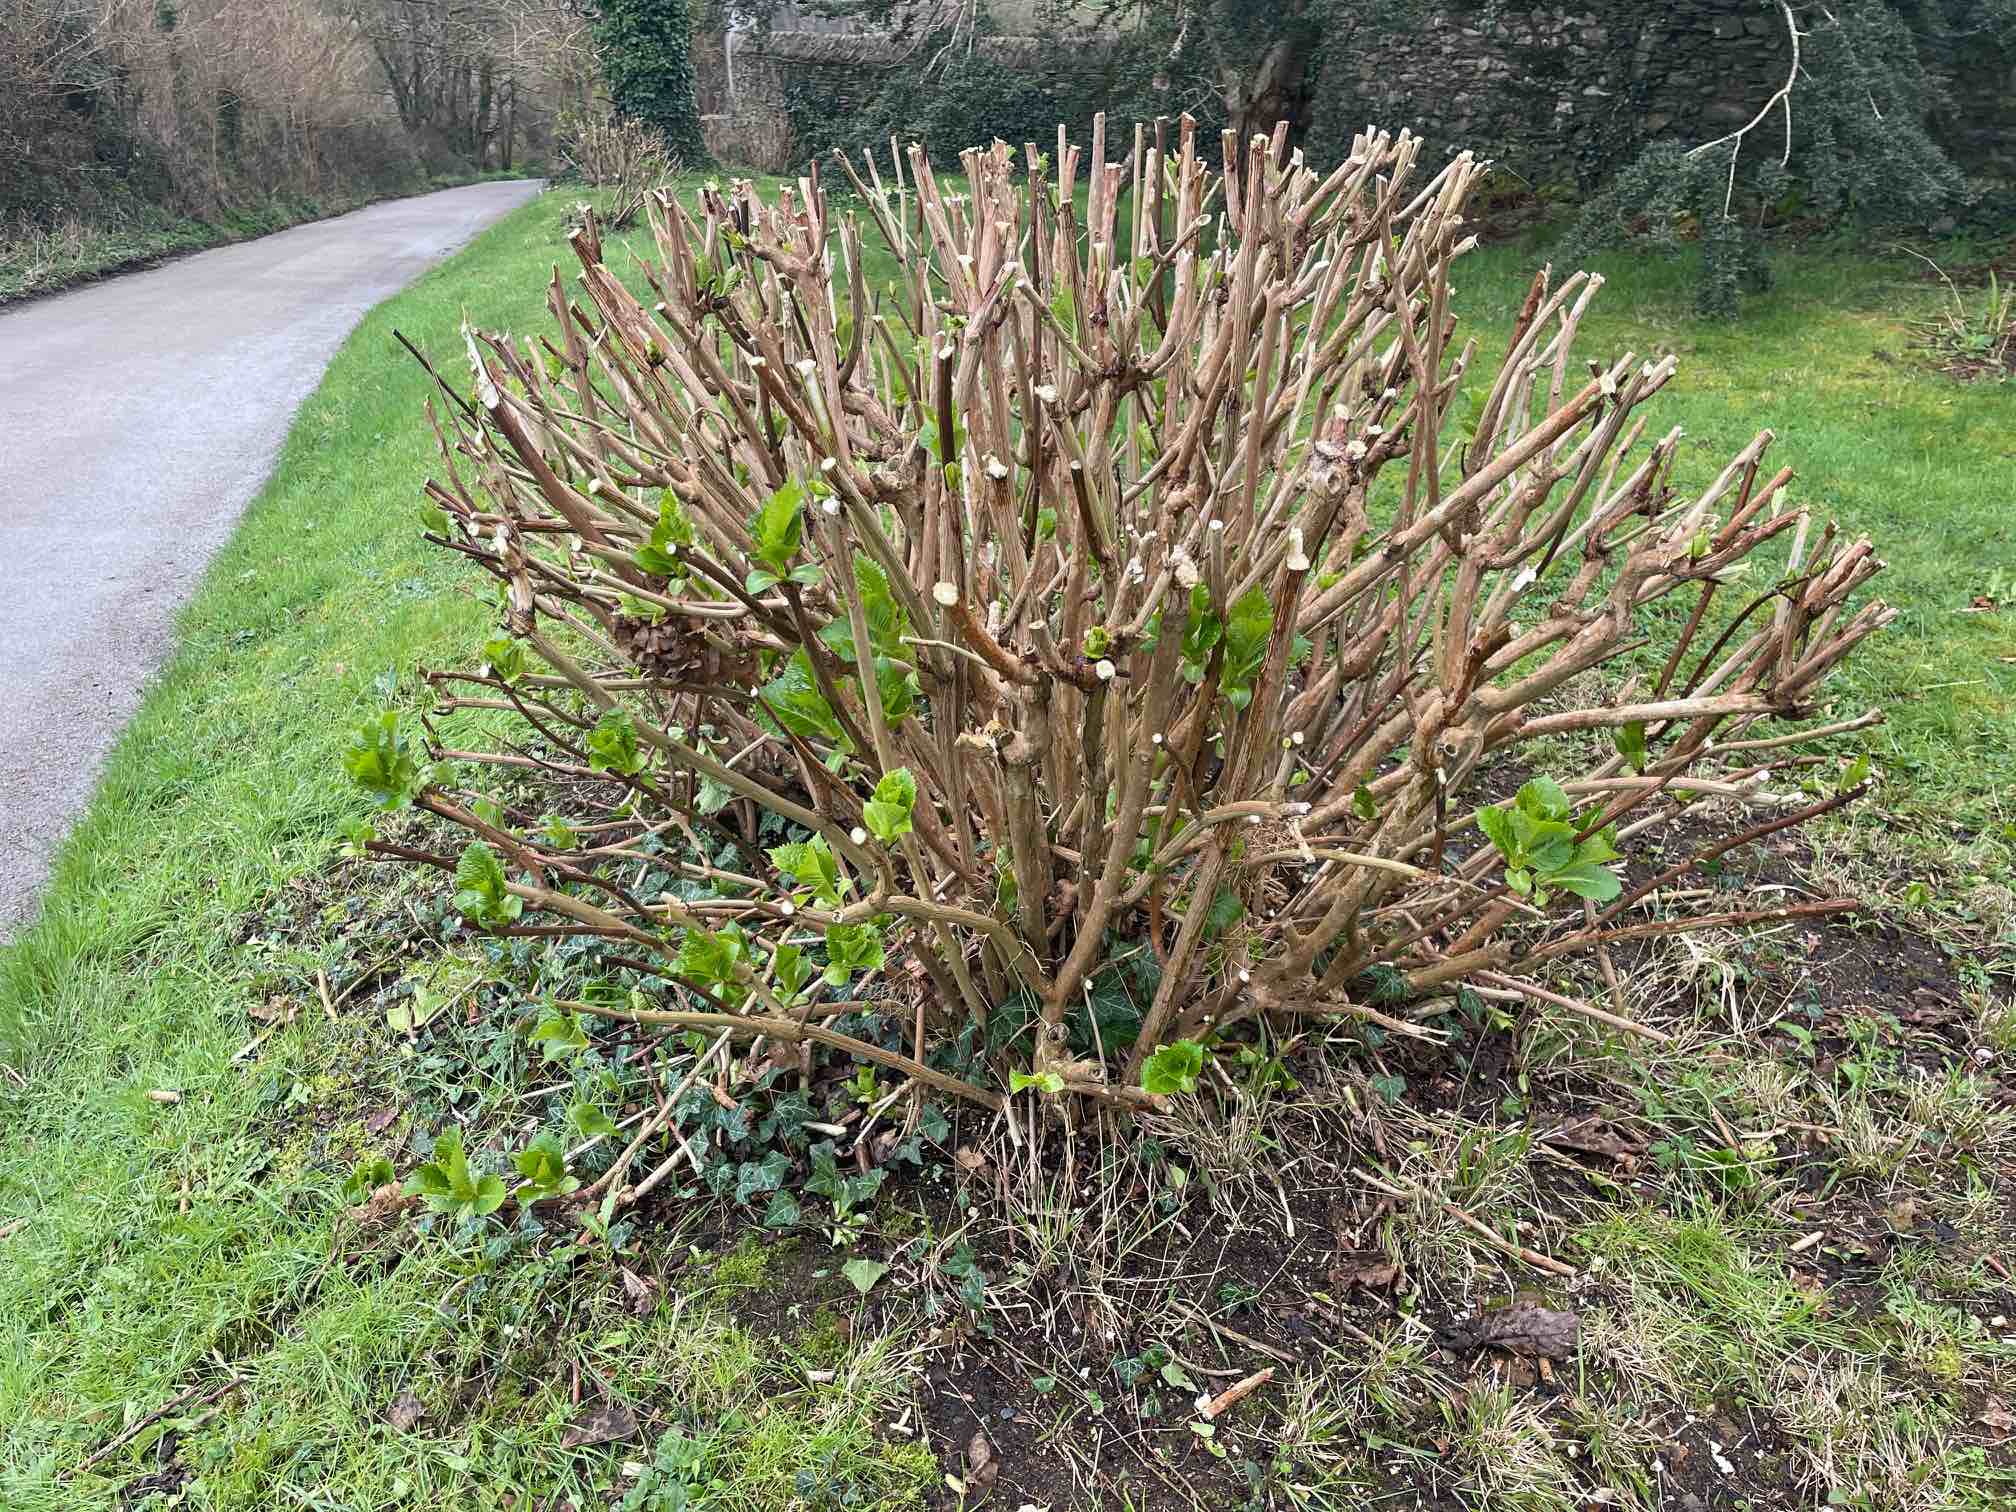 Hydrangeas pruned by hedge trimmer